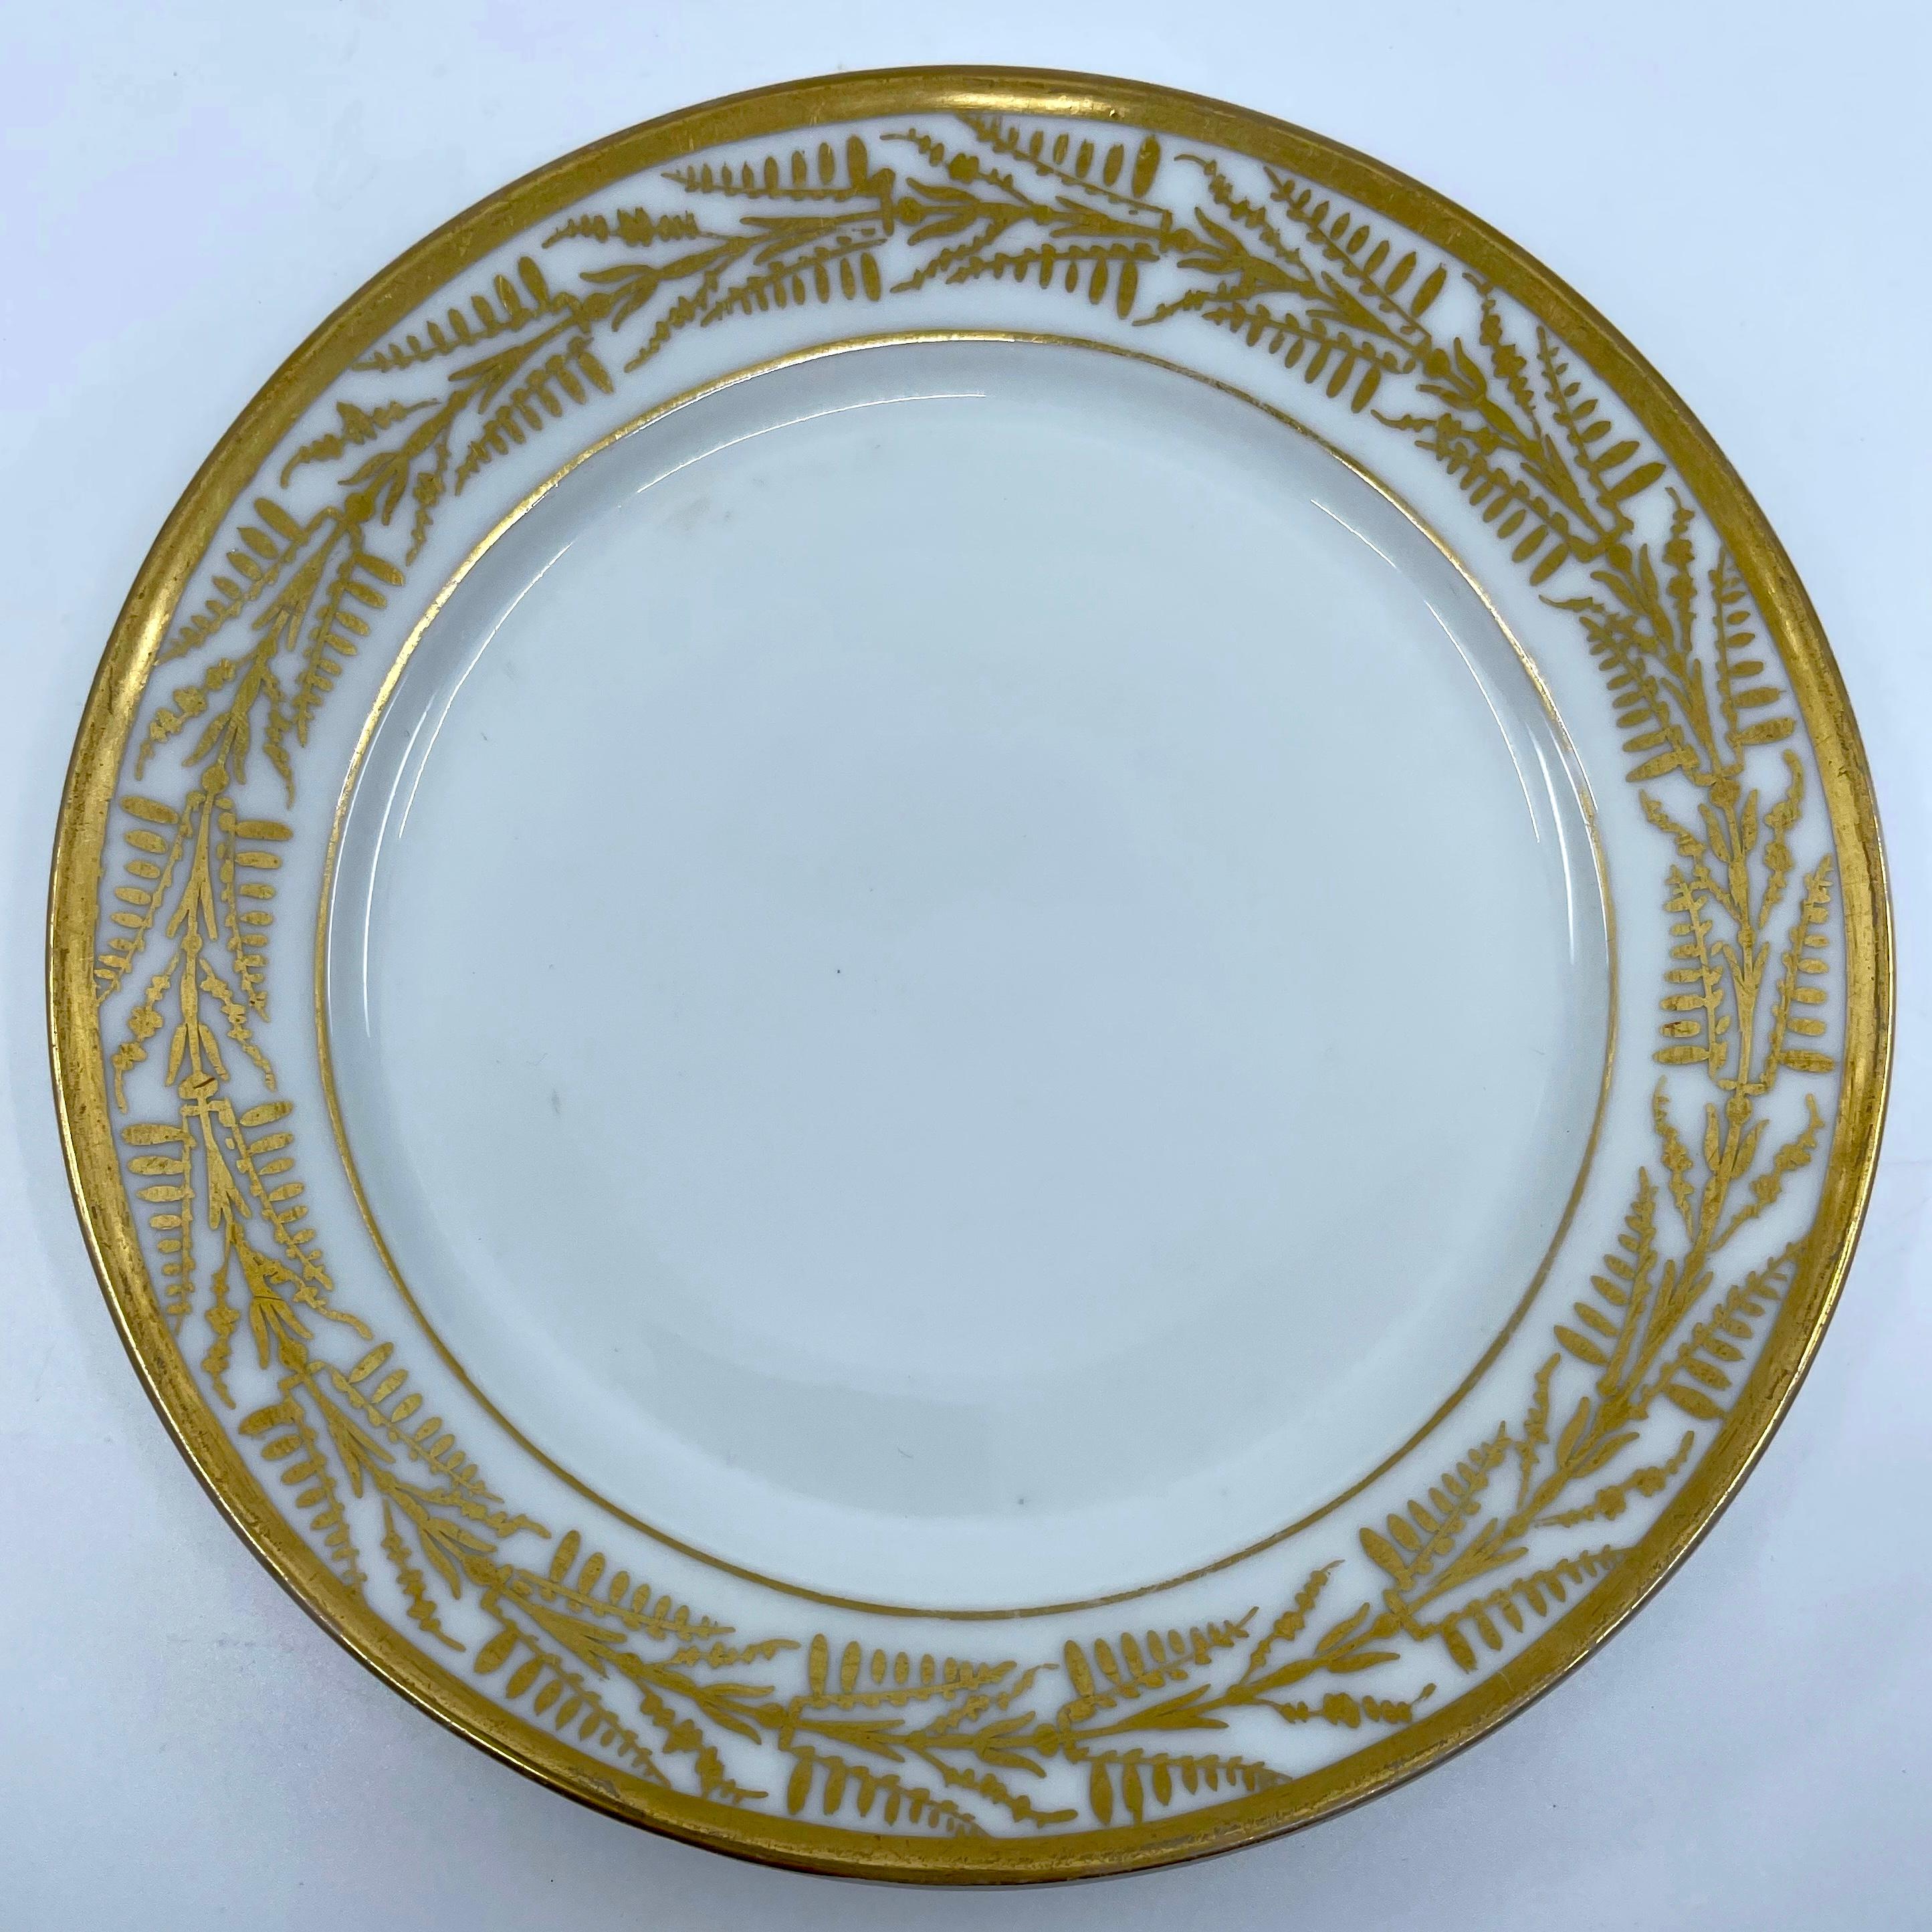 empire china plate